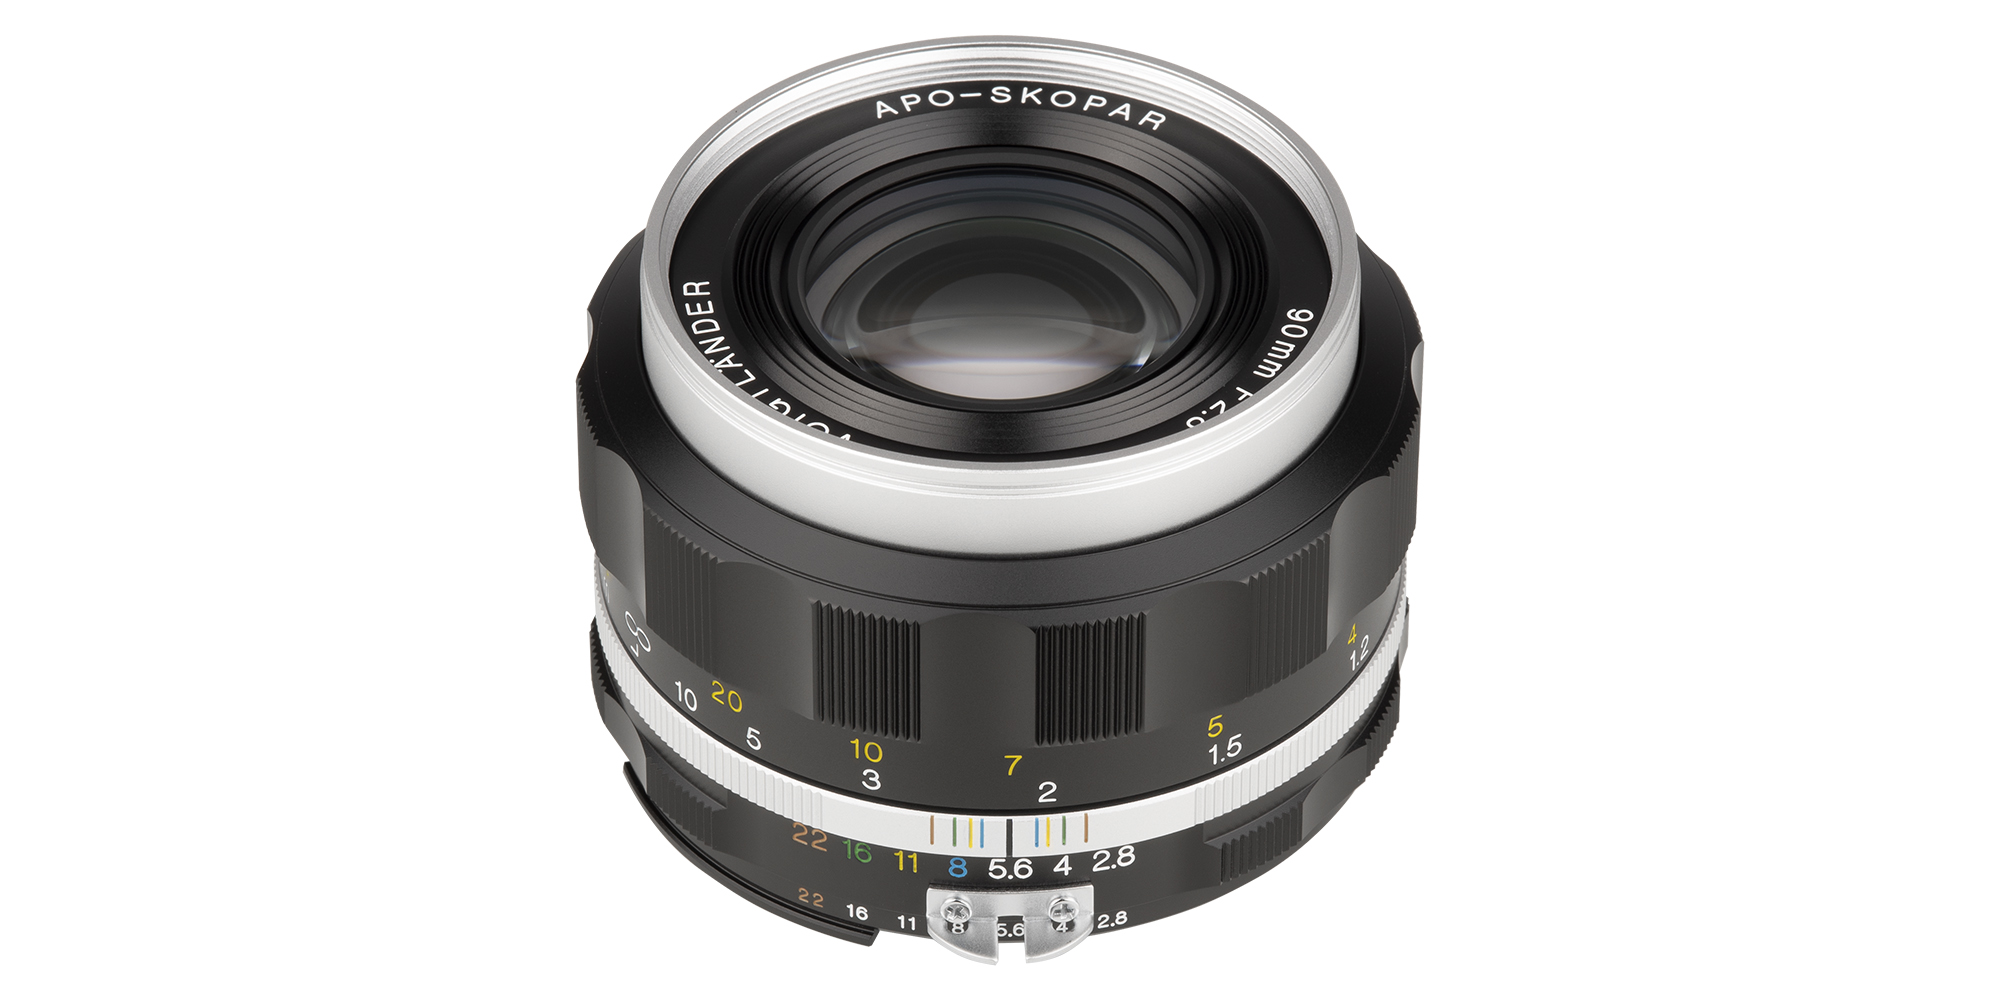 Voigtlander APO Skopar SL IIs 90mm f/2.8 lens for Nikon F - silver - 90mm